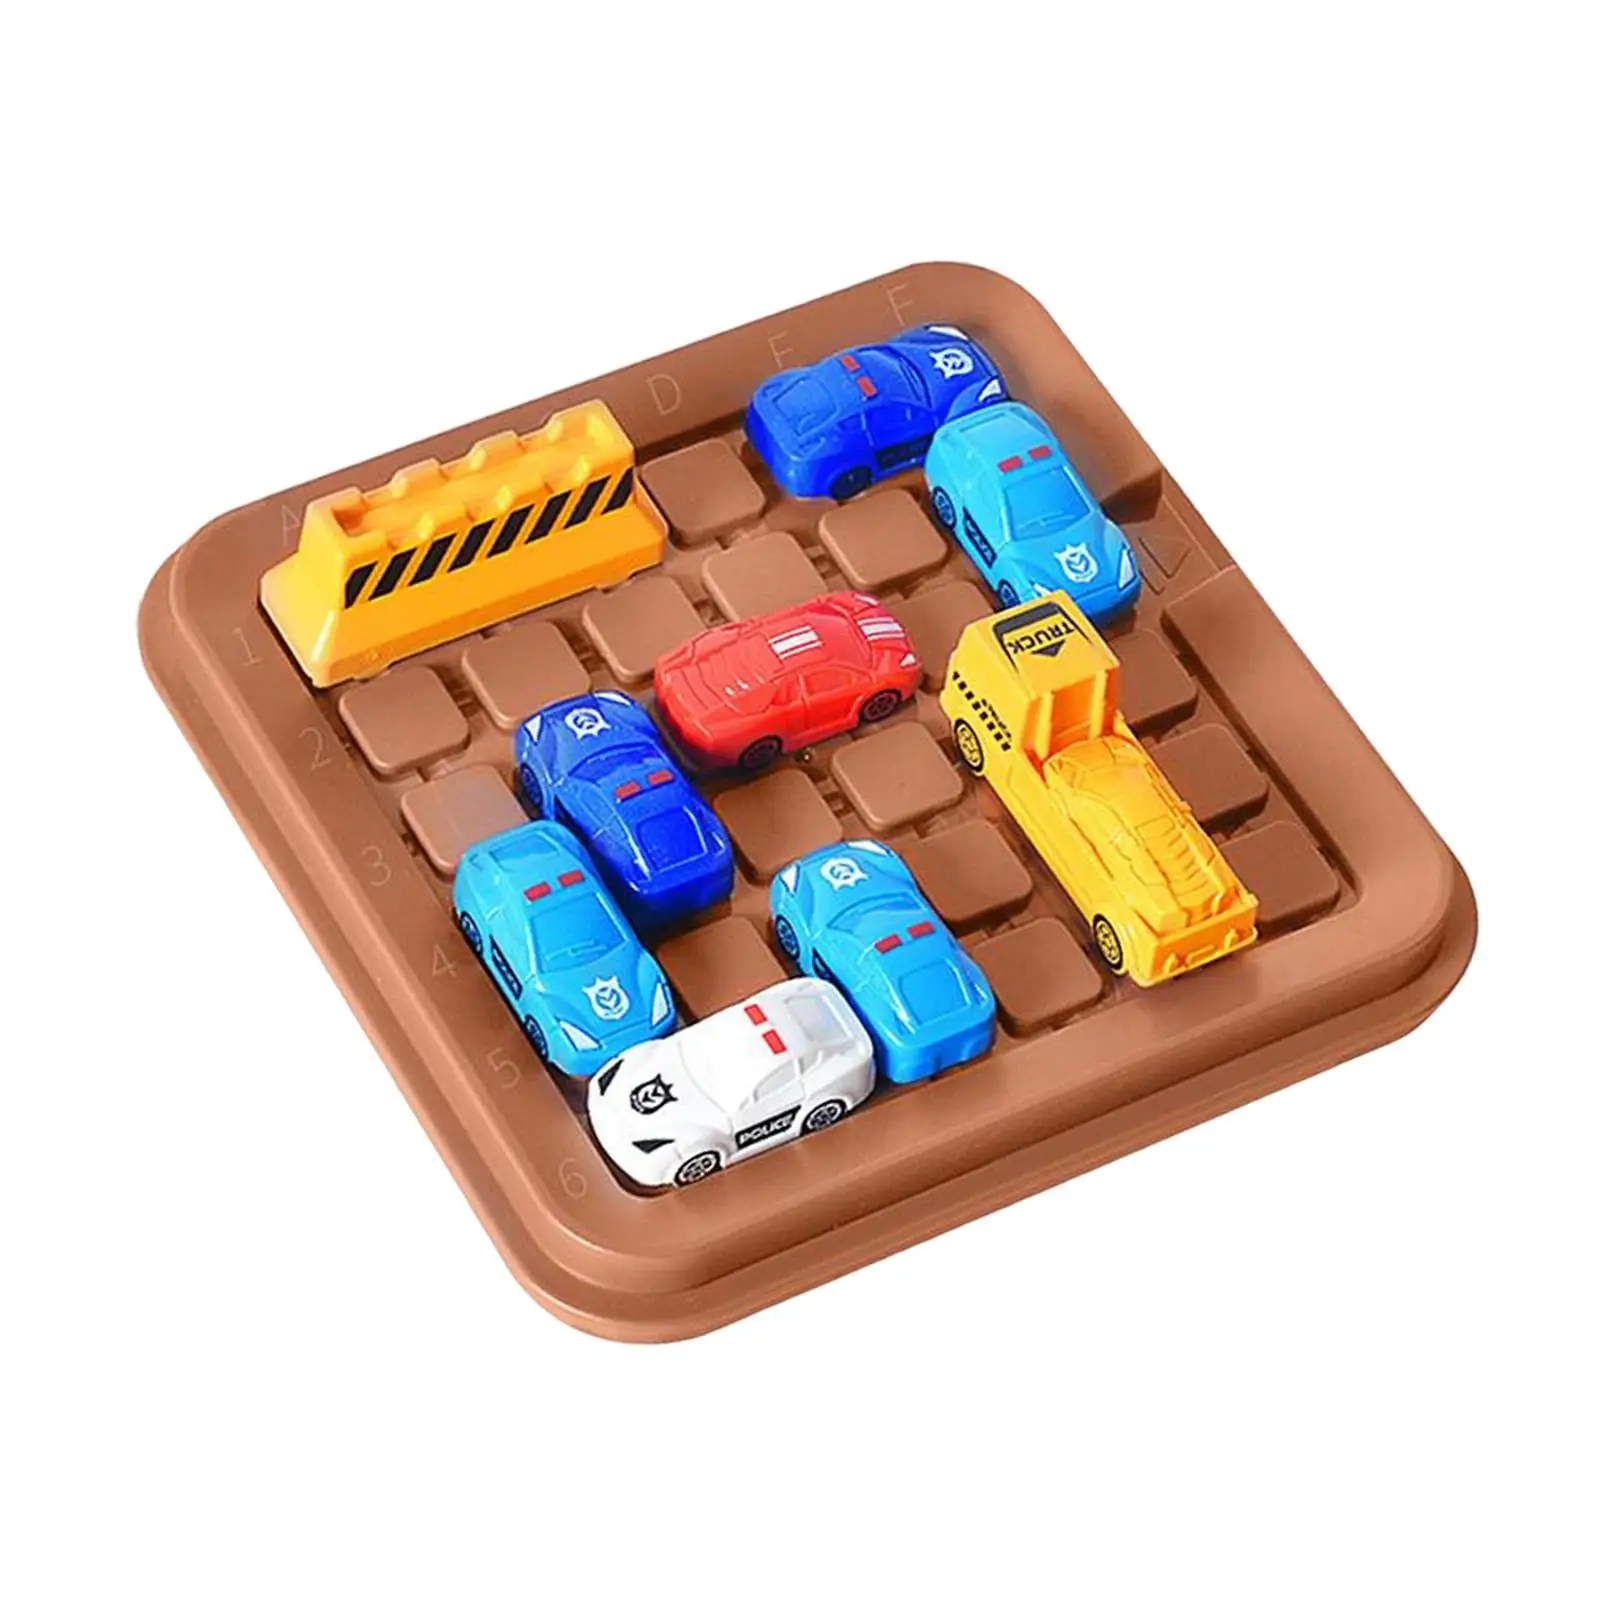 Slide Puzzle Games Educational Toys Development Intellectual Development Toys